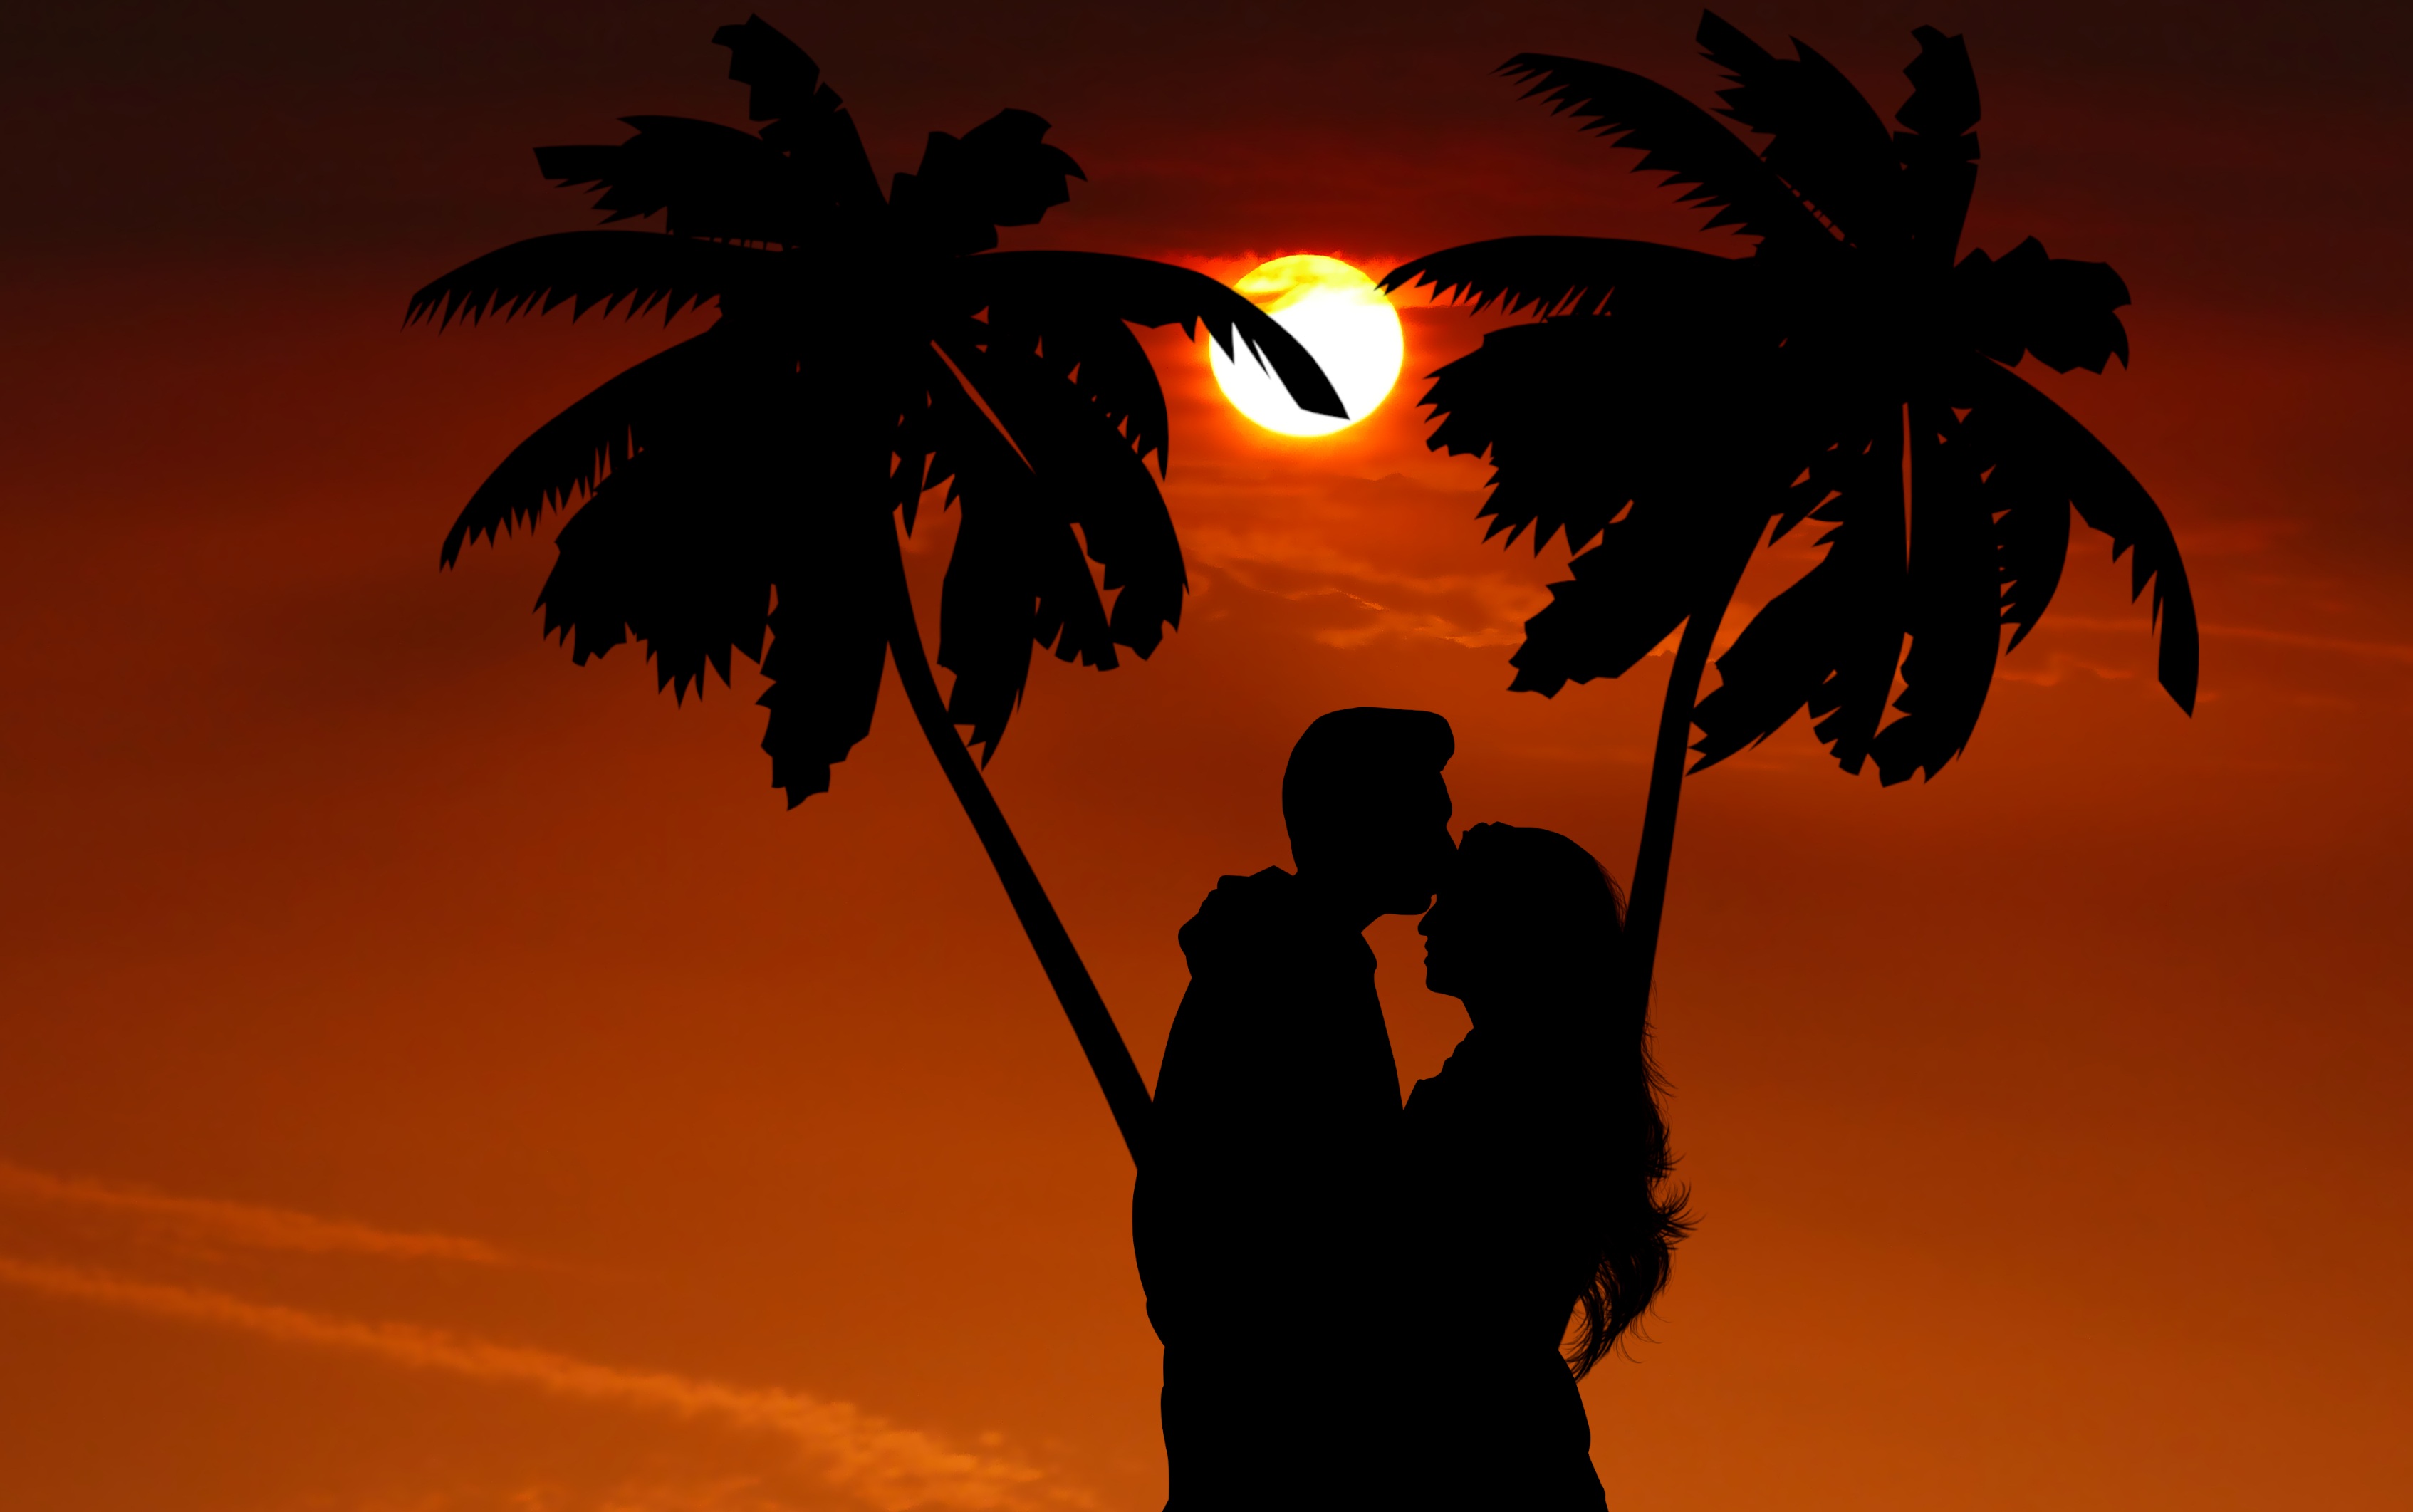 couple, love, romance, pair, embrace, night, silhouettes, palms